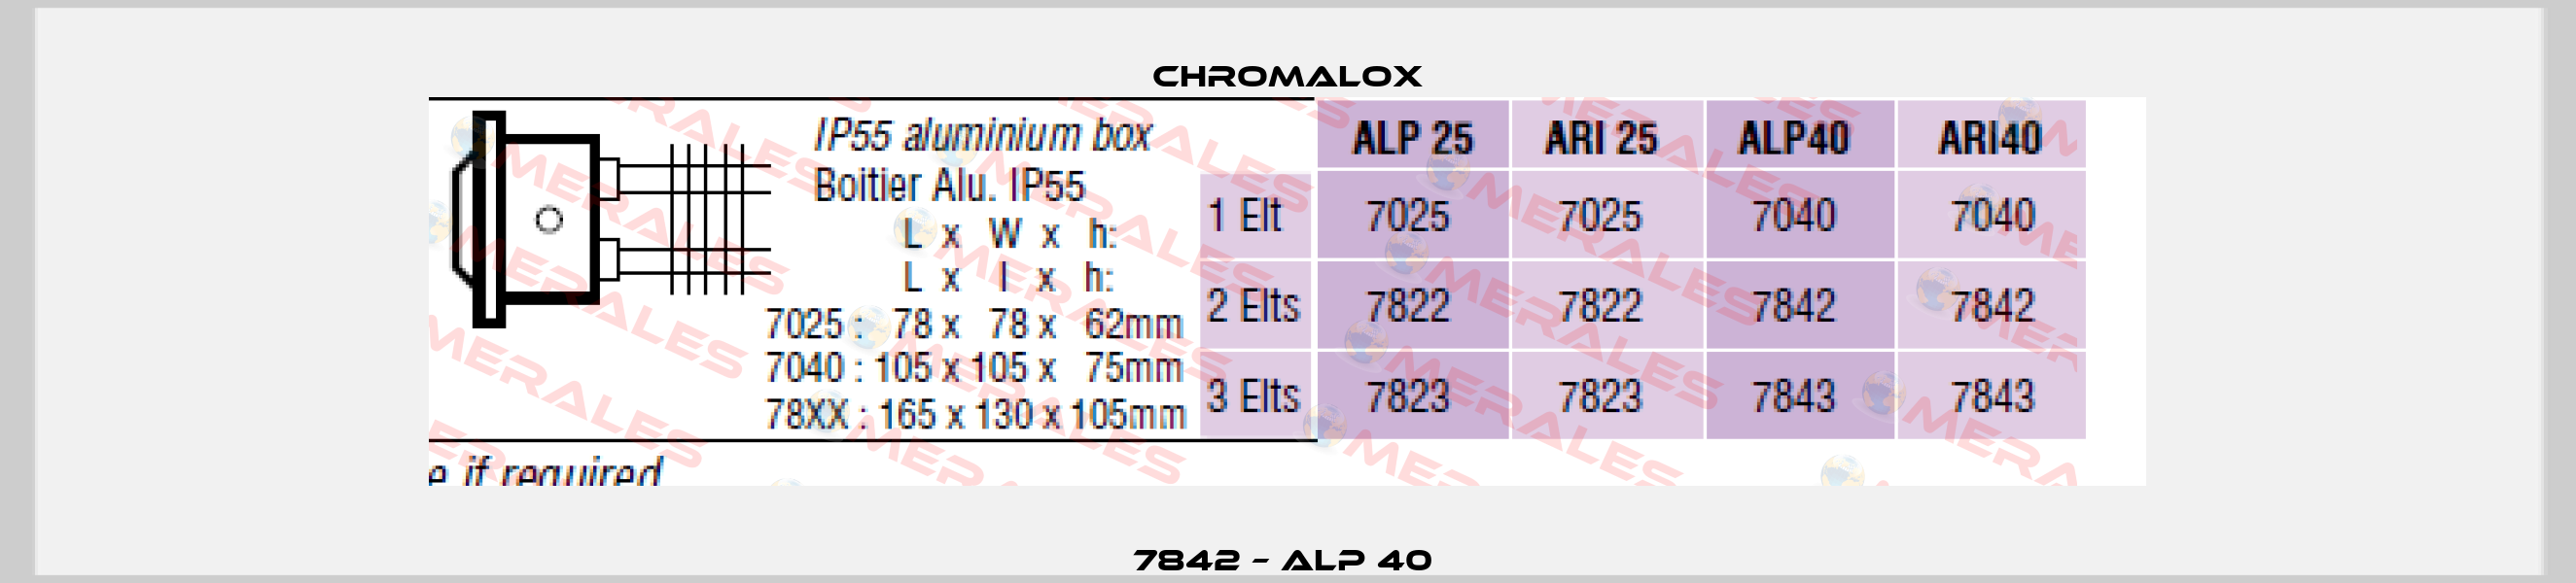 7842 – ALP 40  Chromalox